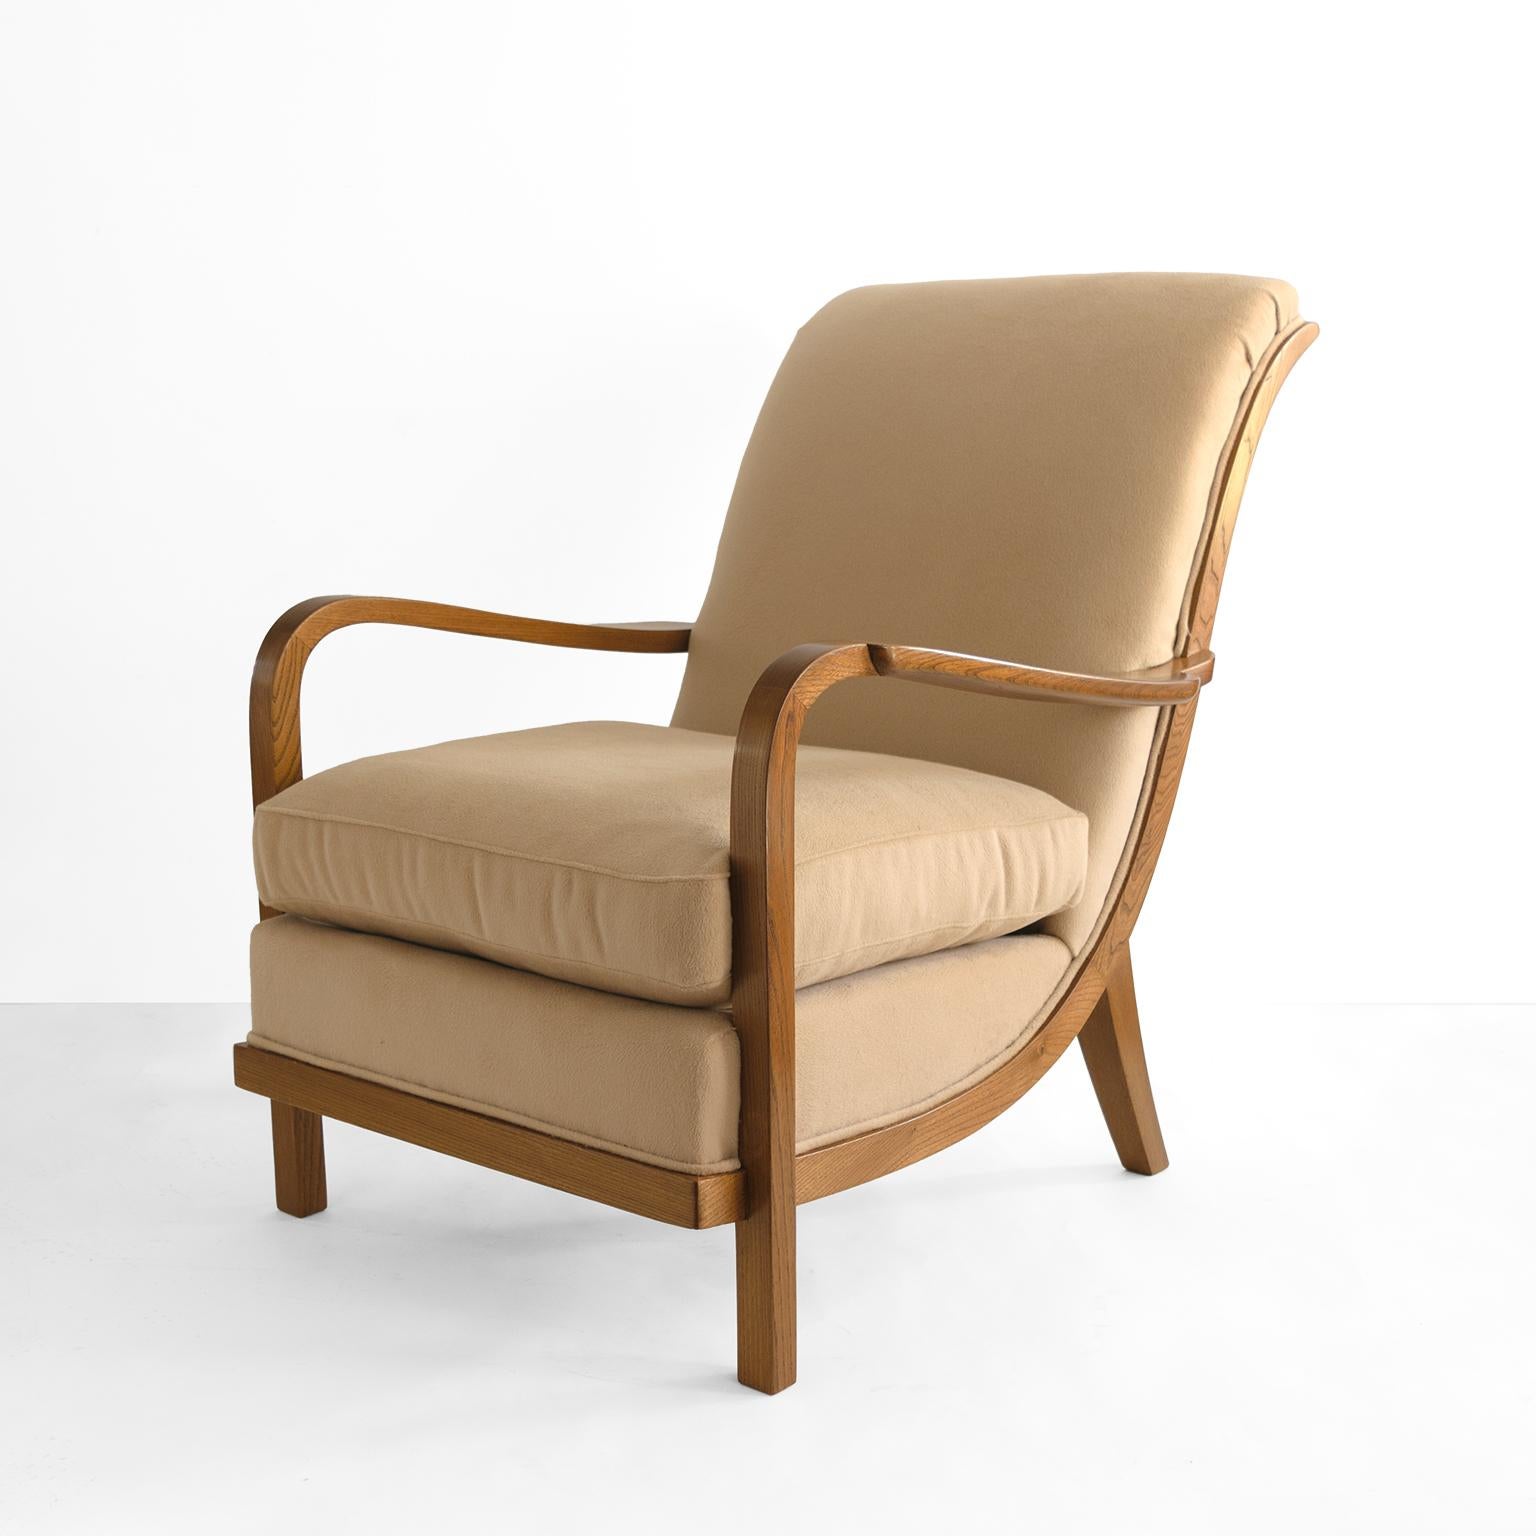 Polished Swedish Art Deco lounge chair by Wilhelm Knoll, Malmo 1933 For Sale